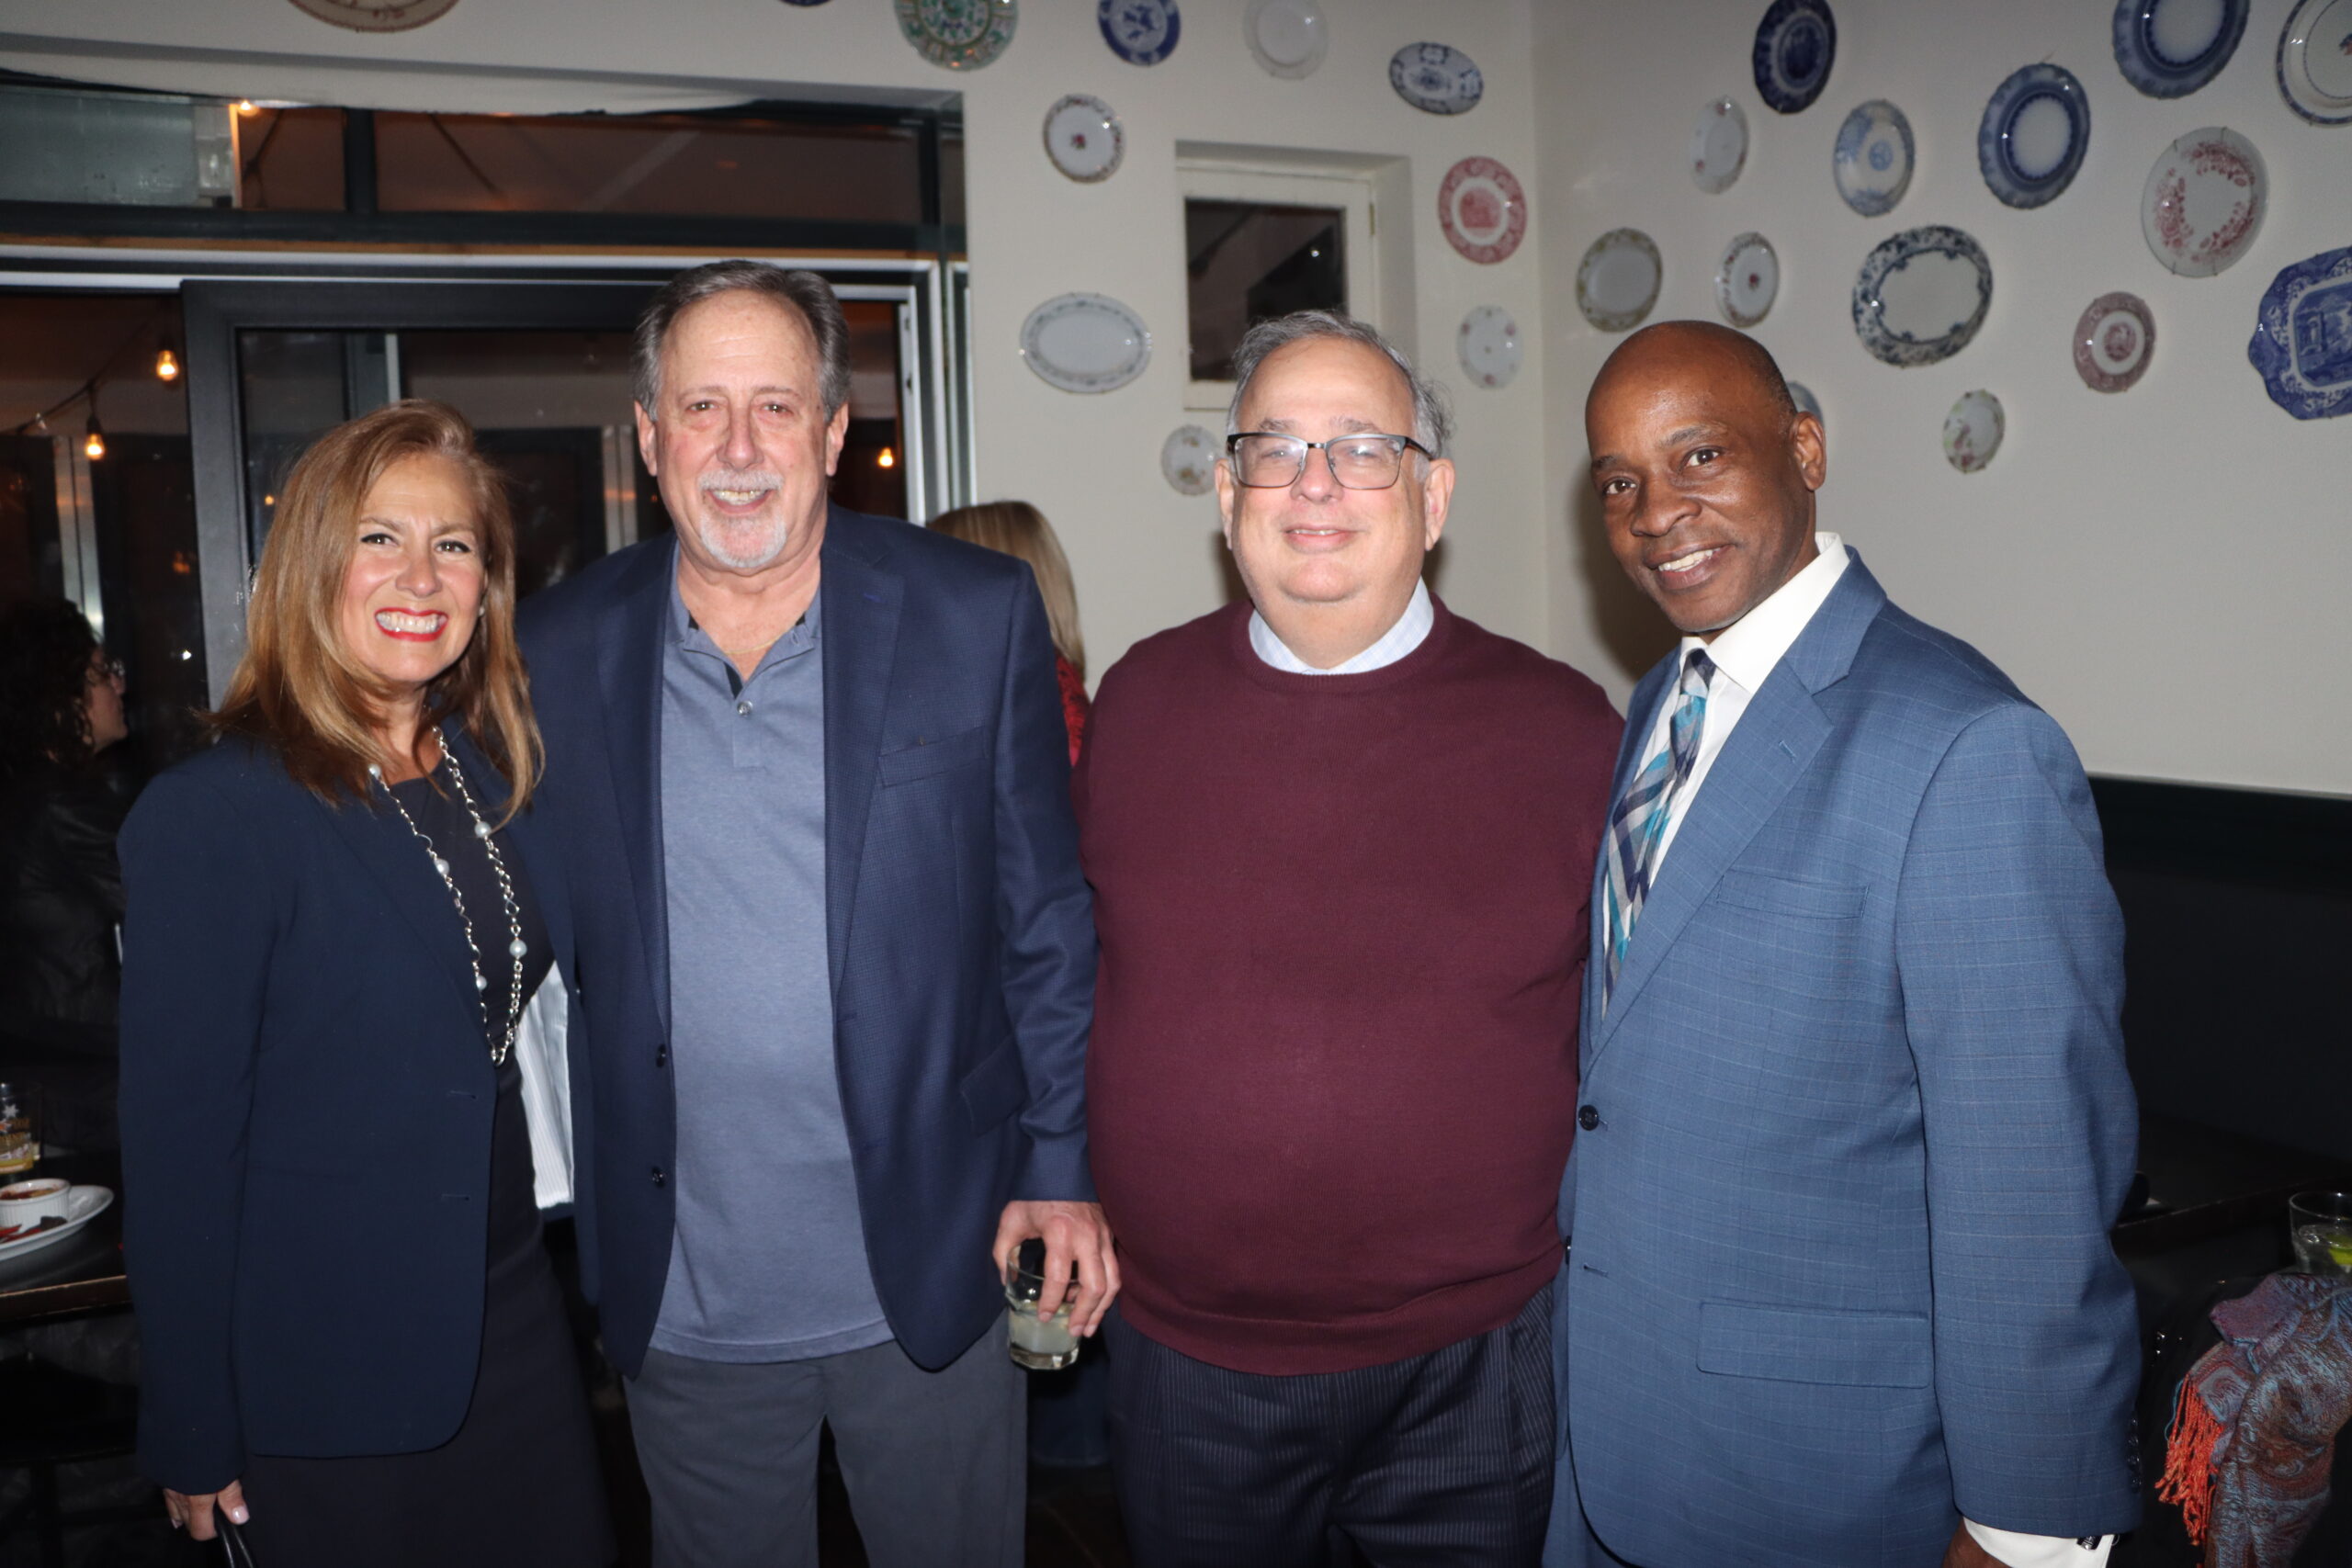 From left: Hon. Consuelo Mallafre Melendez, Hon. Donald Kurtz, Hon. Peter Sweeney, and Hon. Reginald Boddie at Kurtz’s retirement party.